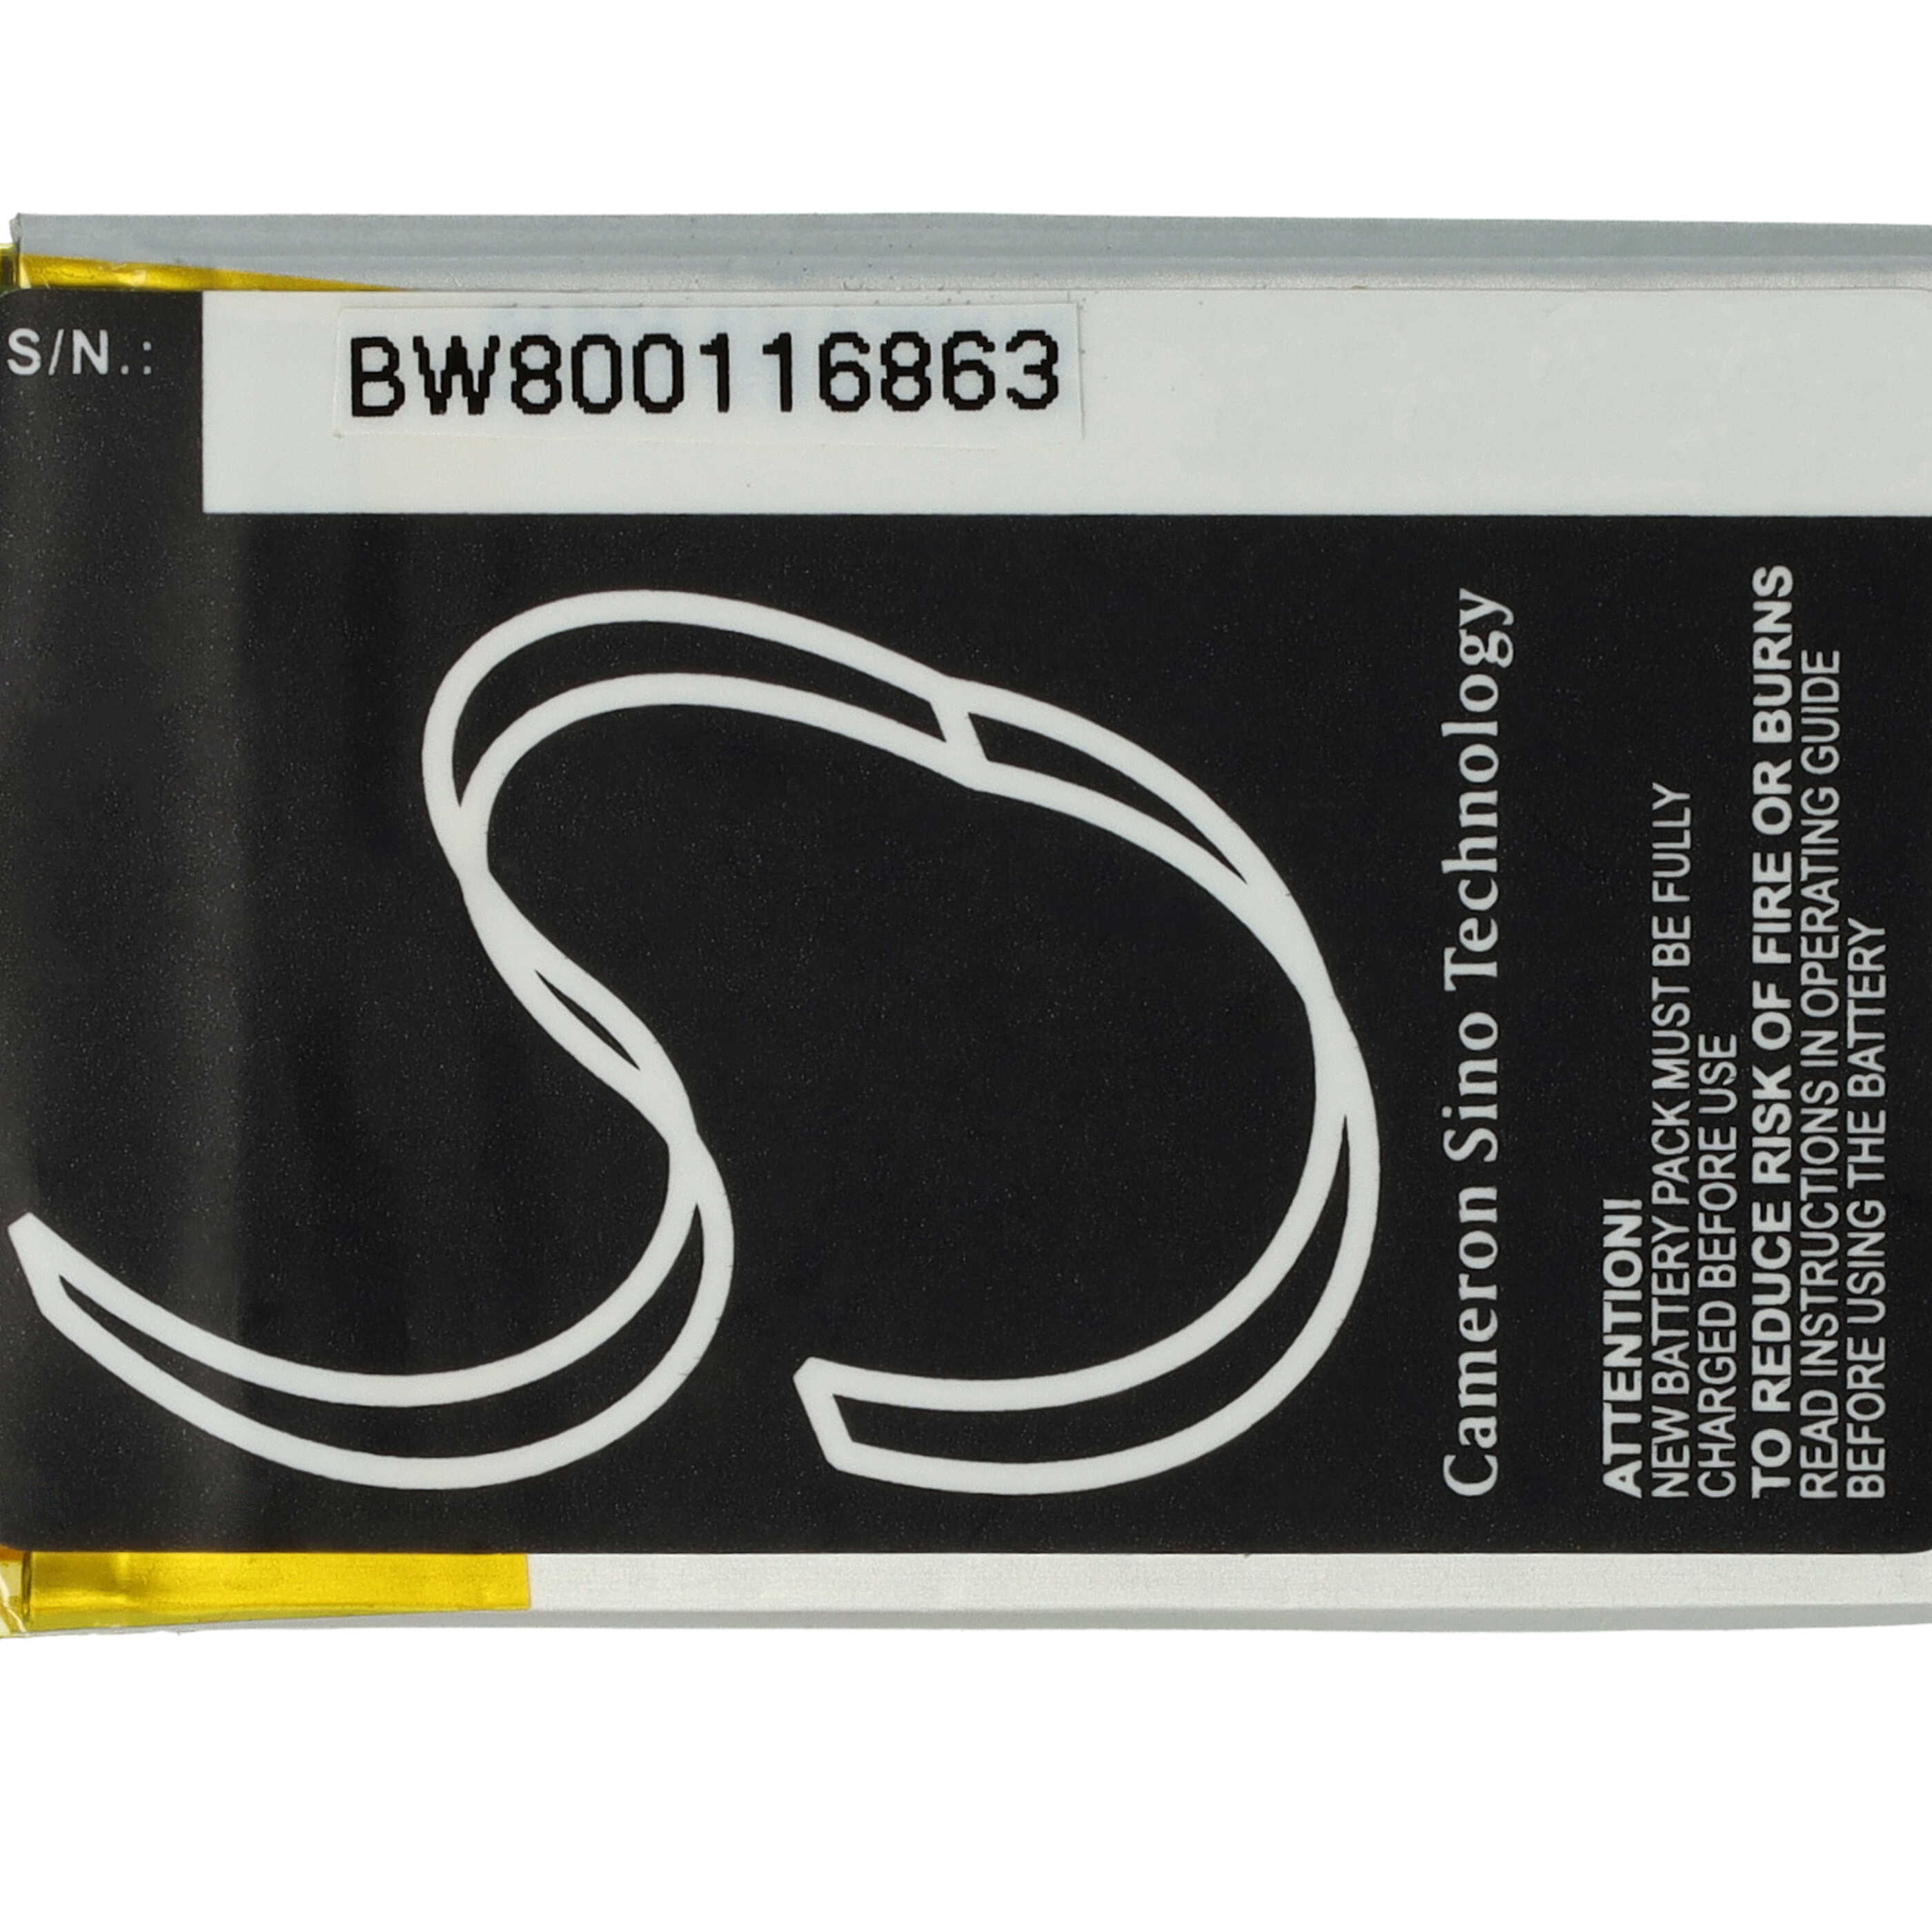 Wireless Headset Battery Replacement for Corsair MH45908 - 700mAh 3.7V Li-polymer